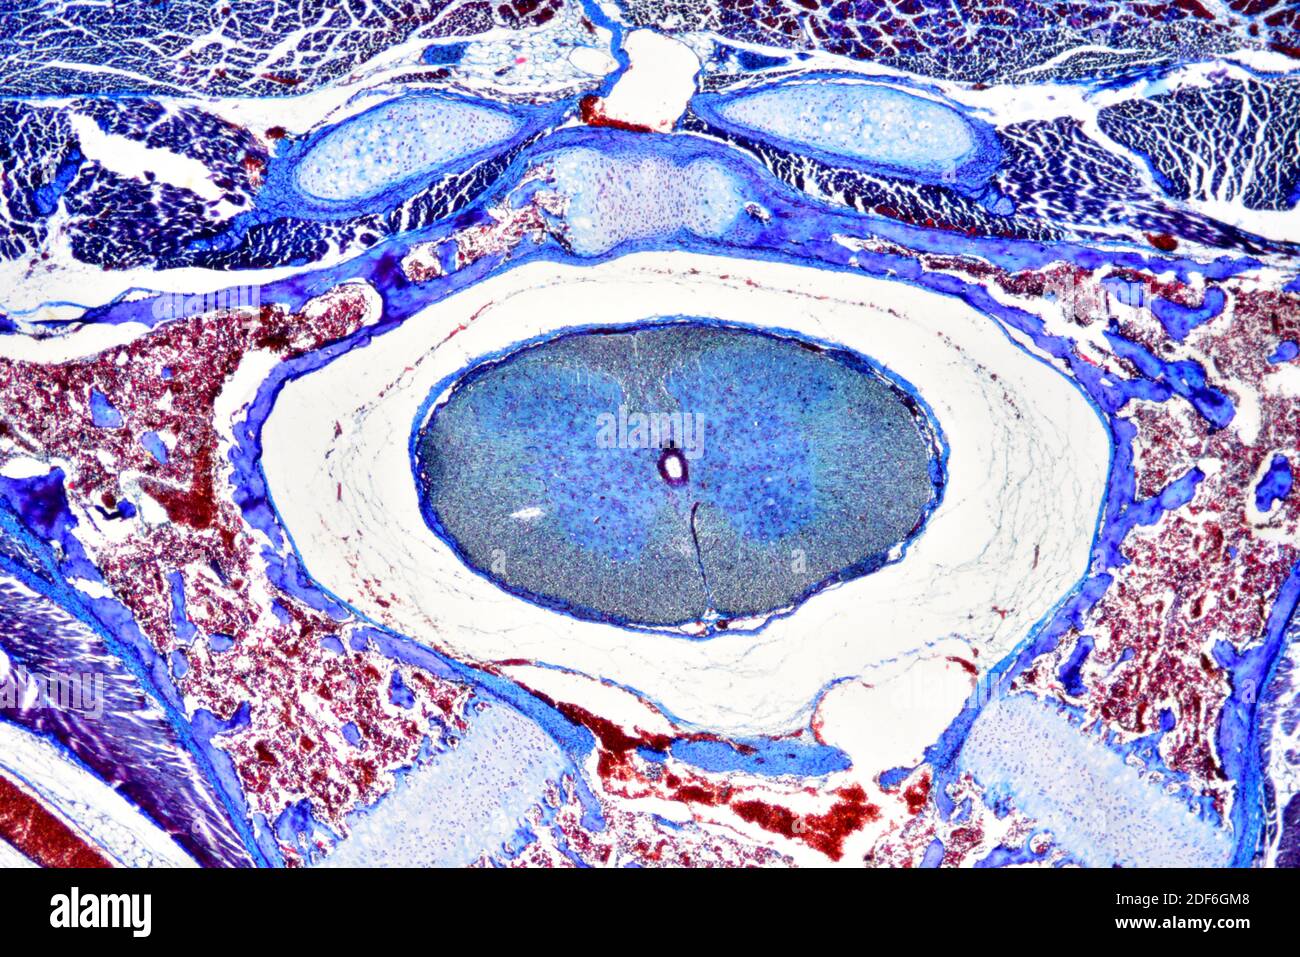 Médula espinal de rata (tejido nervioso). Microscopio óptico X40. Foto de stock